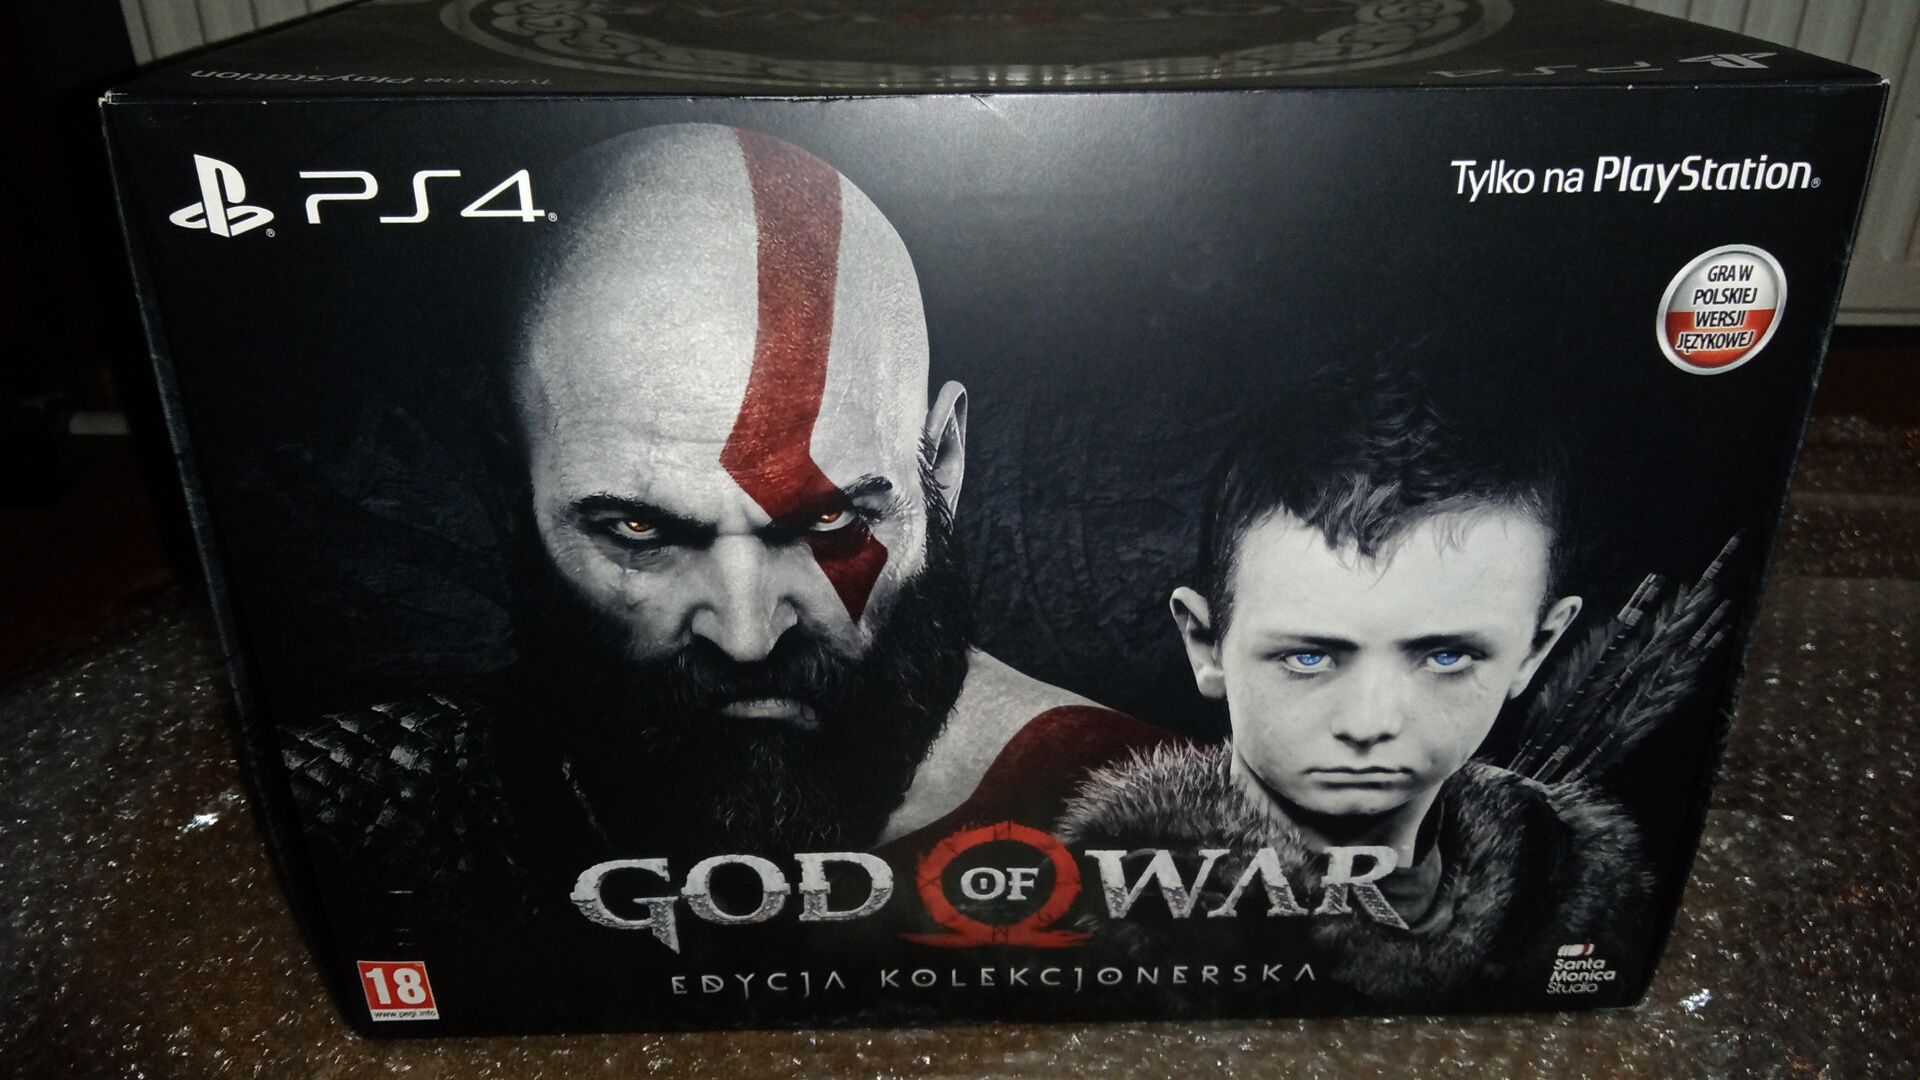 God of war ps4  edycja kolekcjonerska